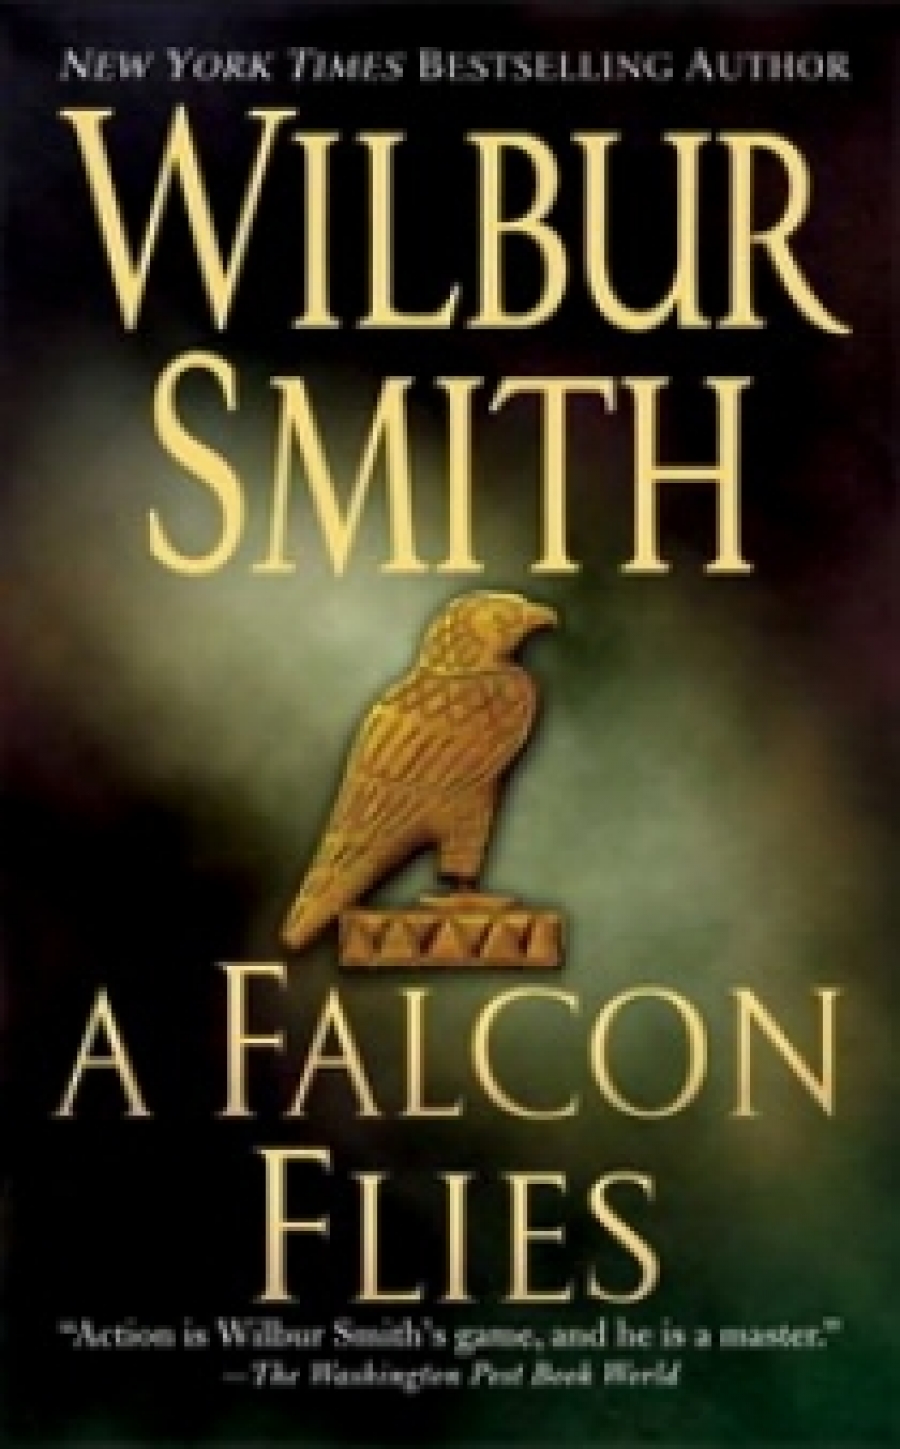 Wilbur S. Falcon Flies 